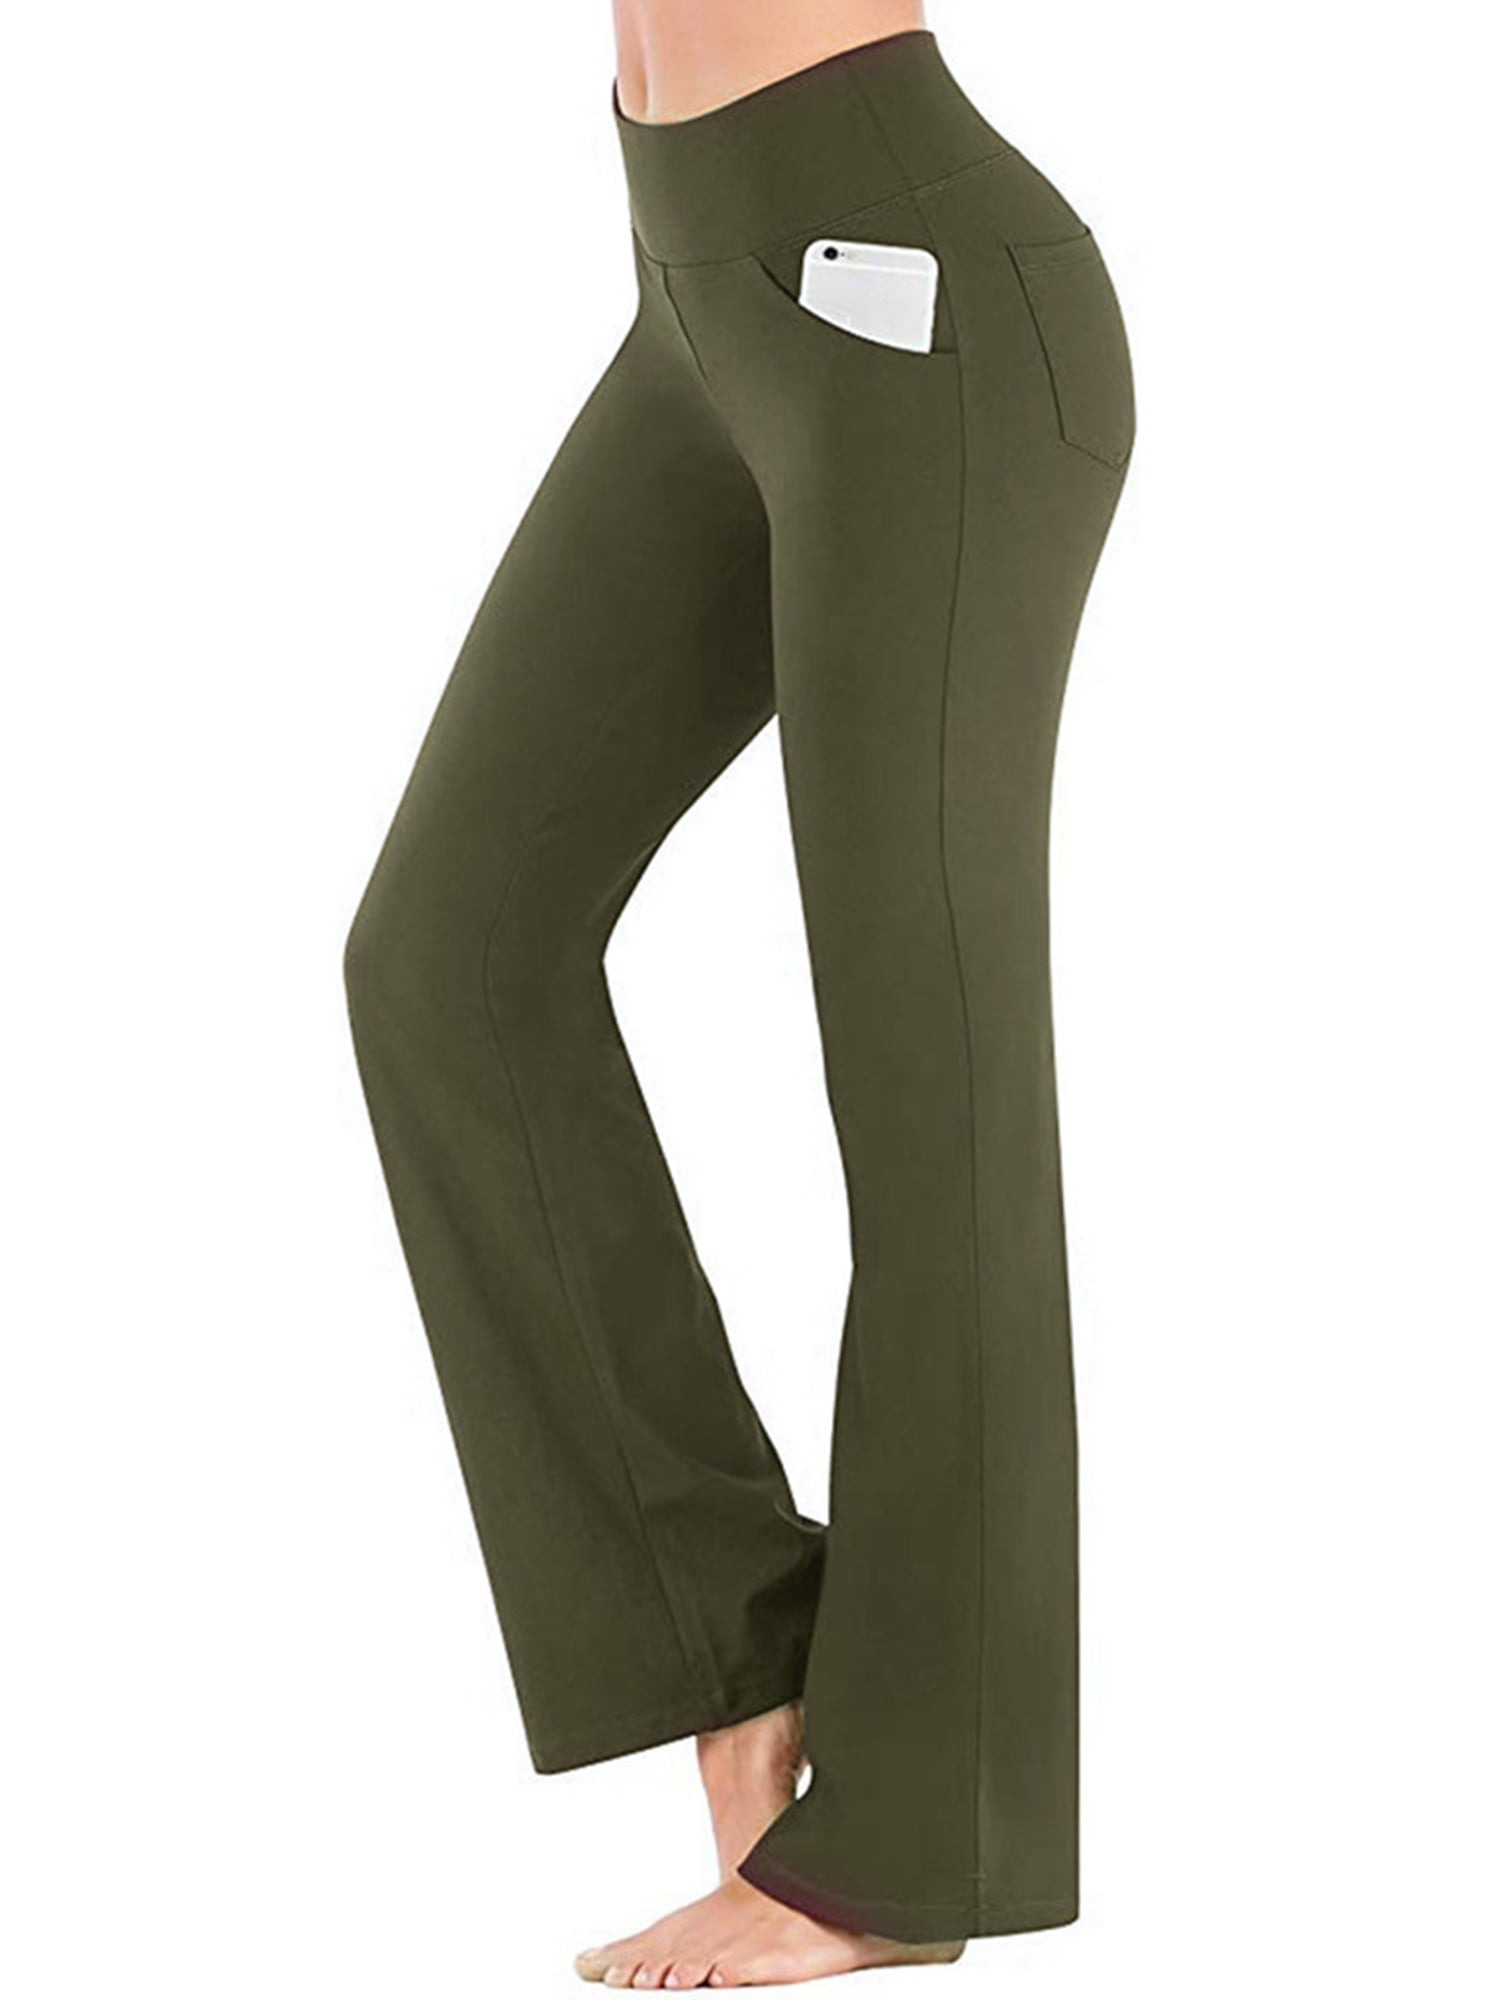 YOHOYOHA Plus Size Dress Yoga Pants High Waisted Stretch Bootcut Flared Leg Pants for Workout Work XL 2X 3X 4X 